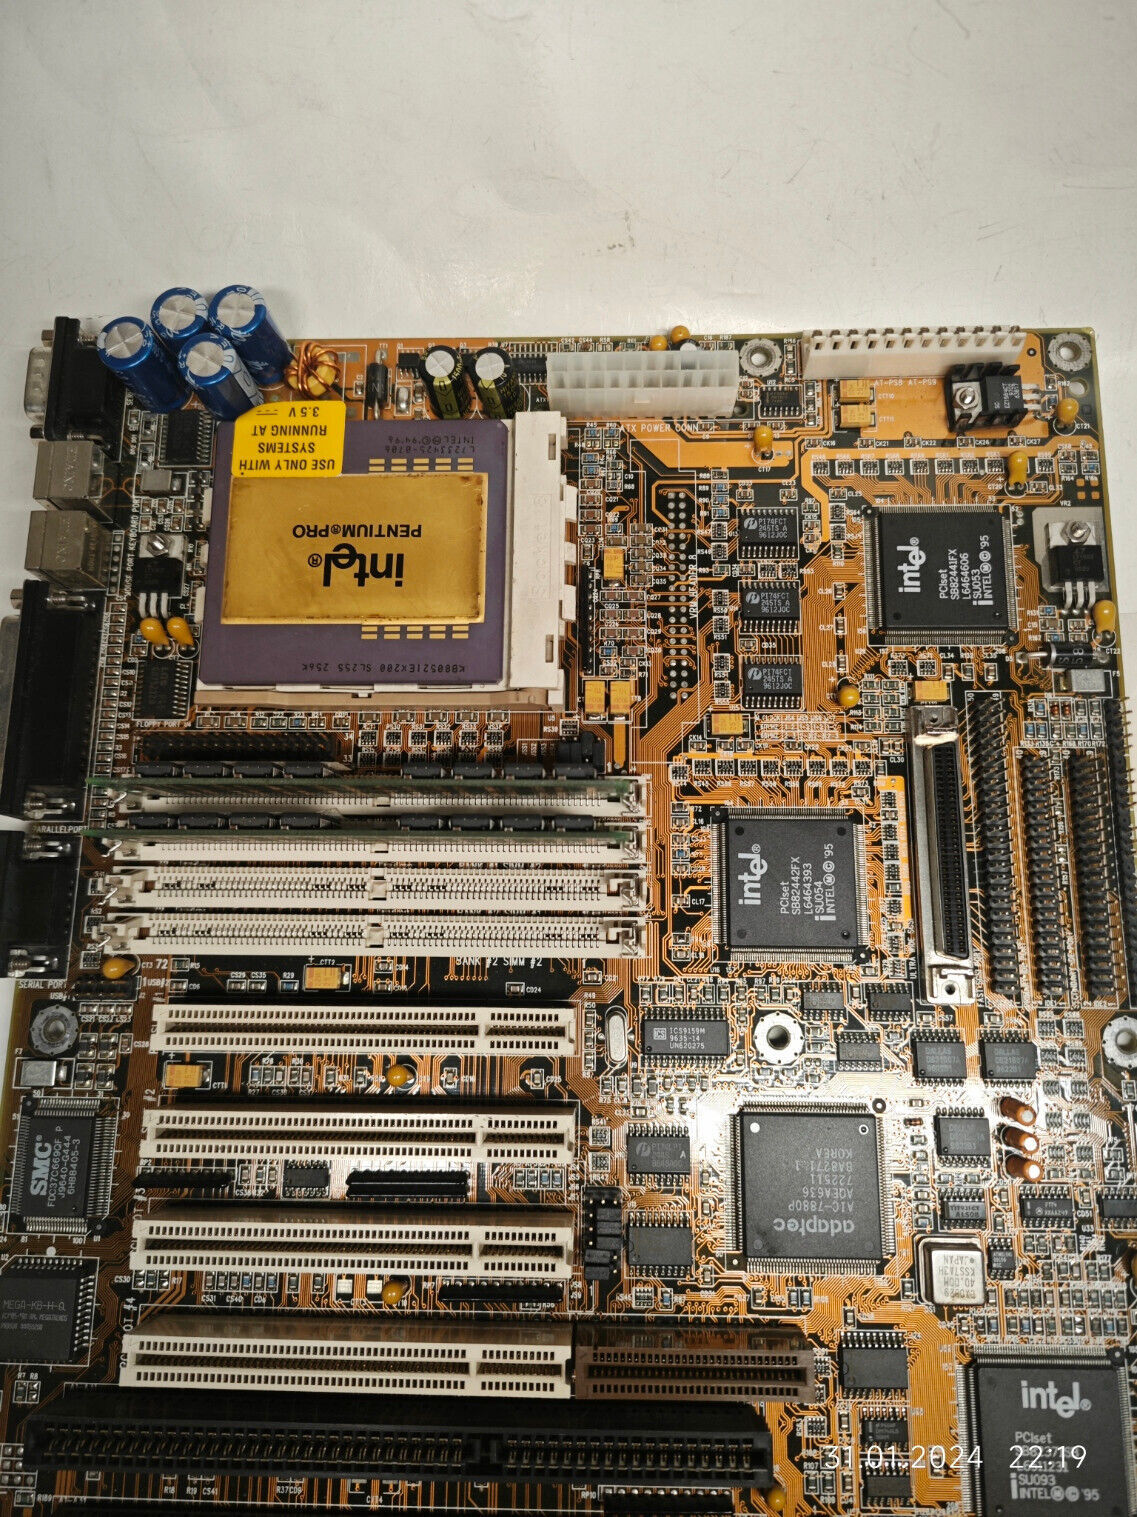 Socket 8 Pentium PRO SET Gateway 2000 Intel VS440FX Venus + 200 MHz CPU & 32 MB - $325.97